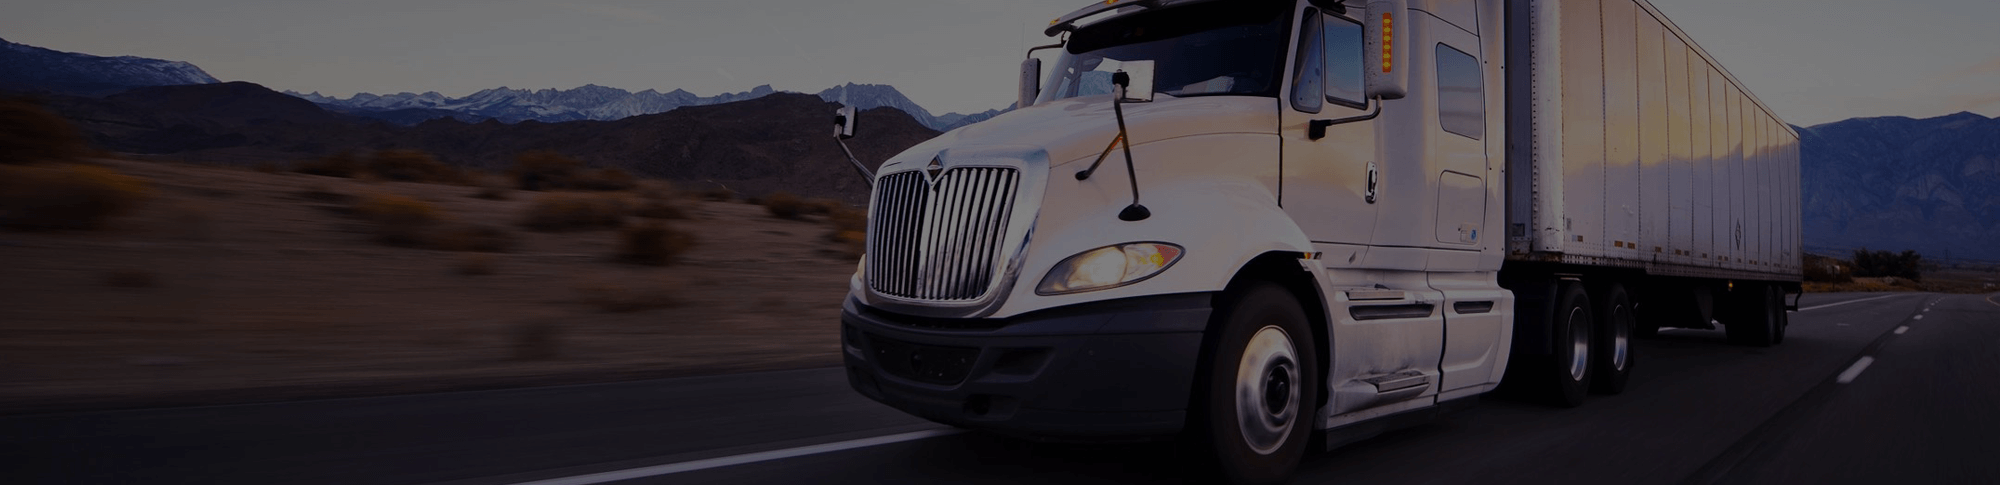 Fleet/Vehicle Management Solutions